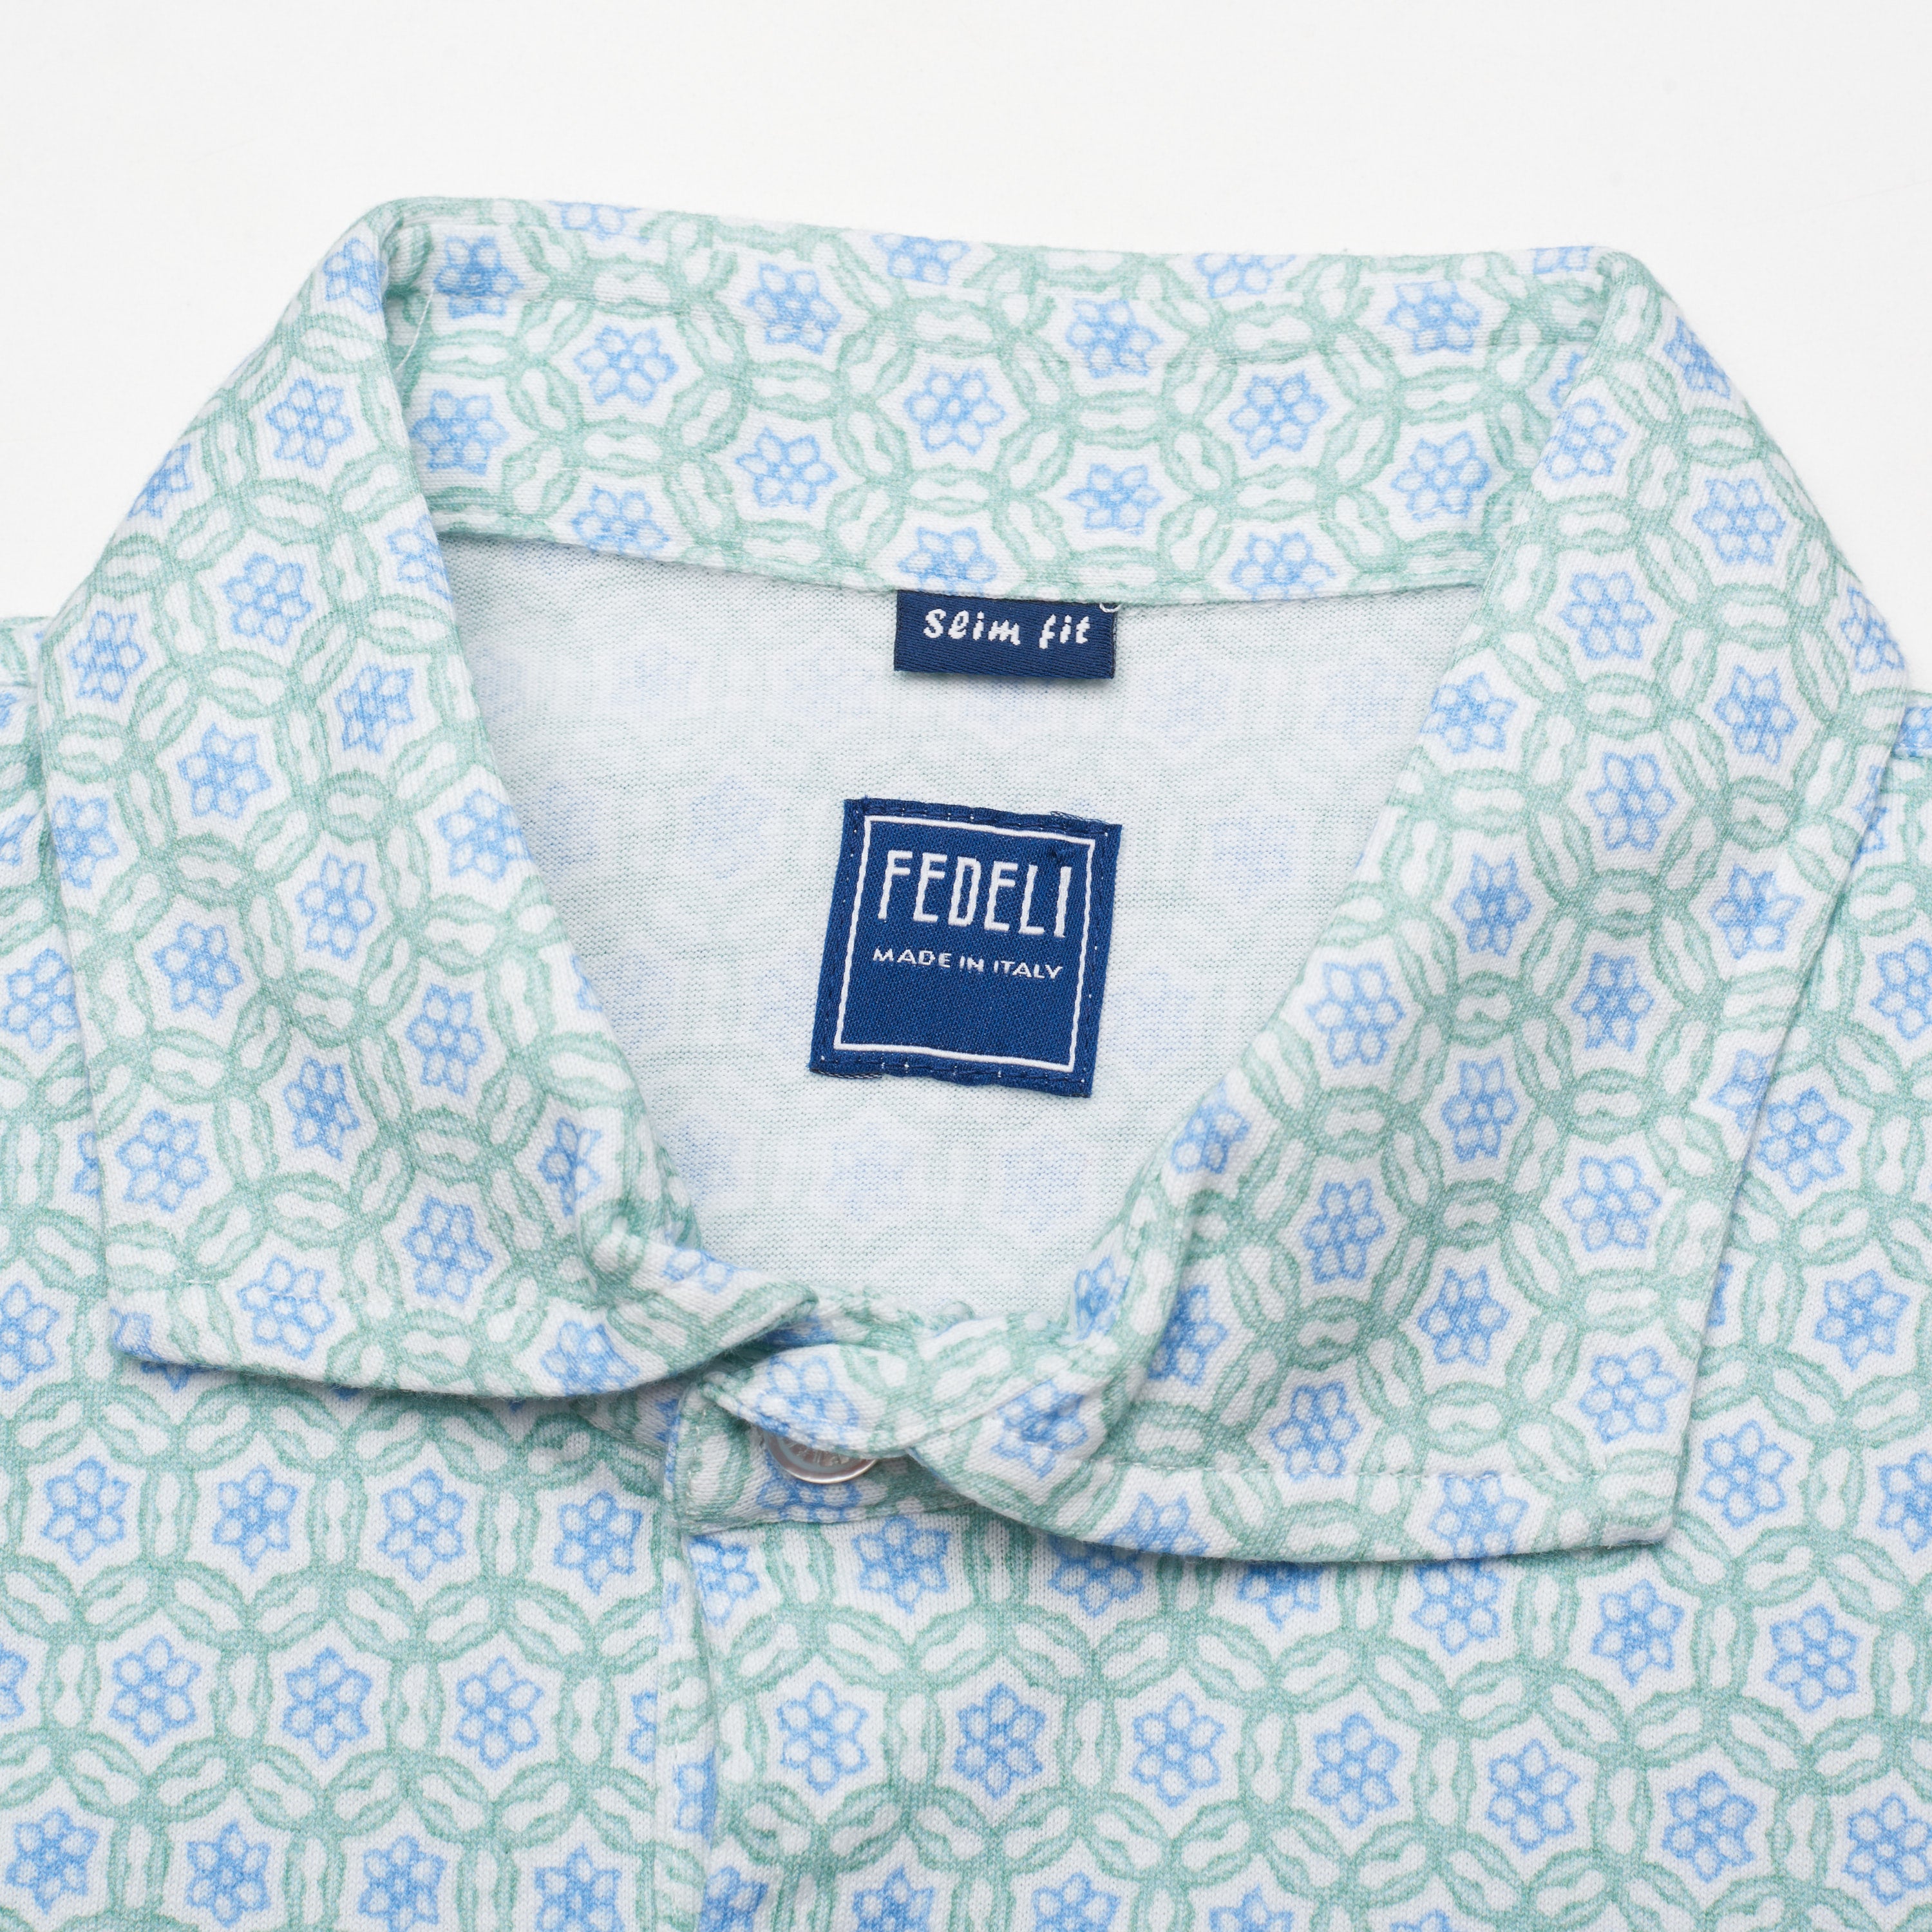 FEDELI "Zero" Green-Blue Floral Medallion Cotton Jersey Supima Polo Shirt NEW Sl FEDELI